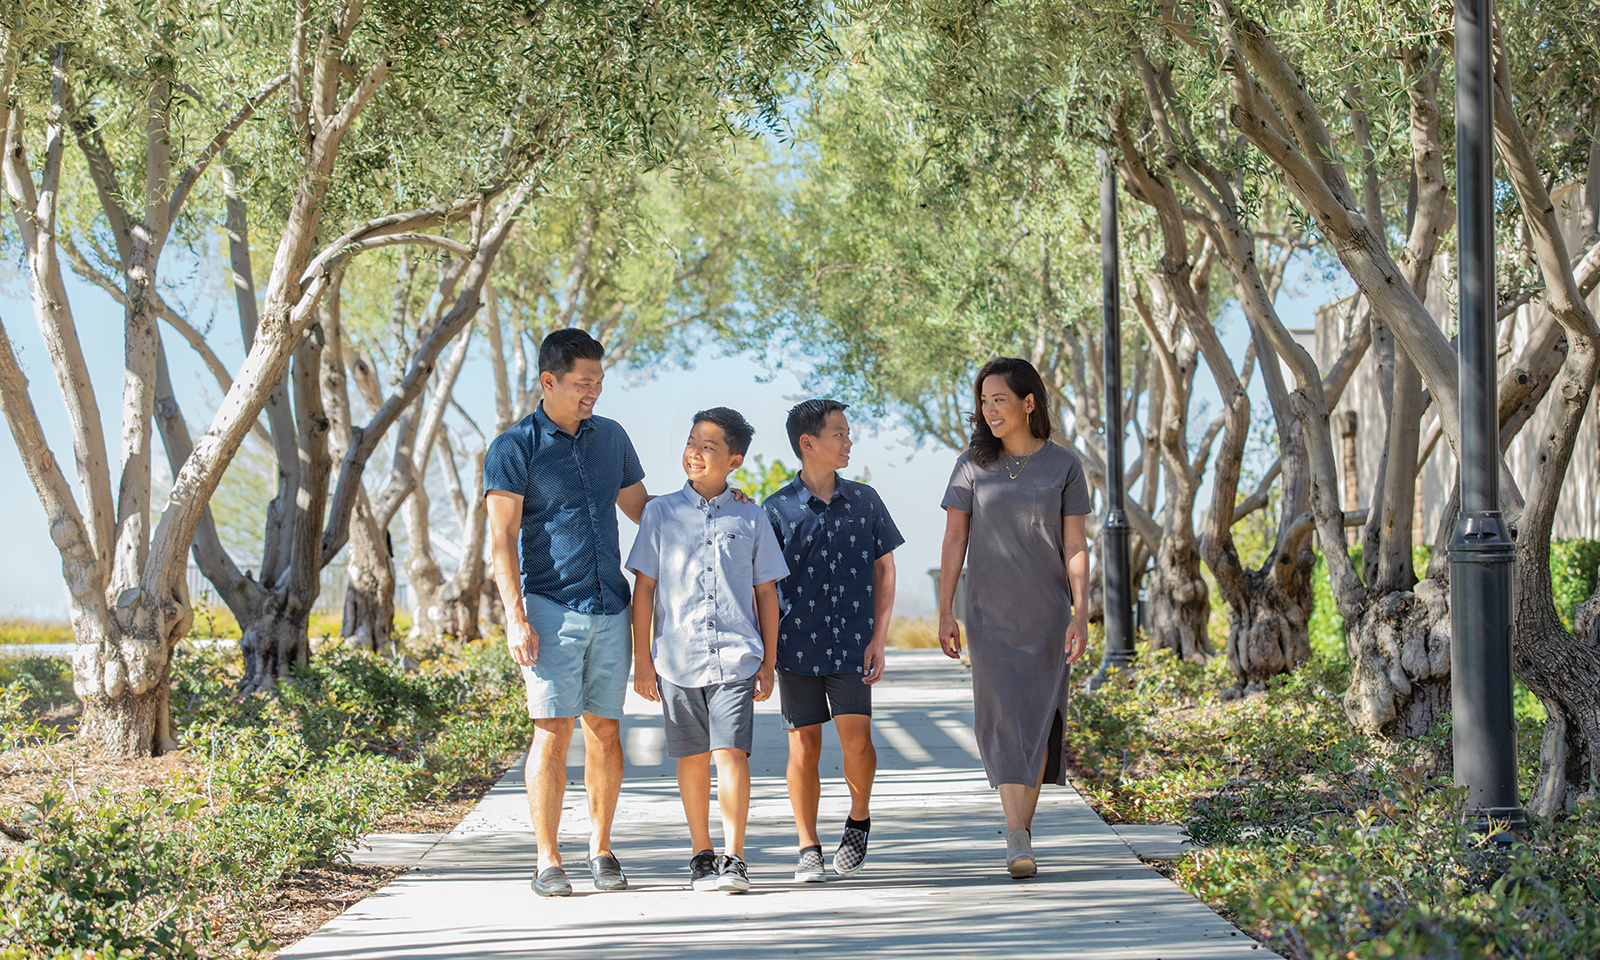 One family’s housing journey in Irvine